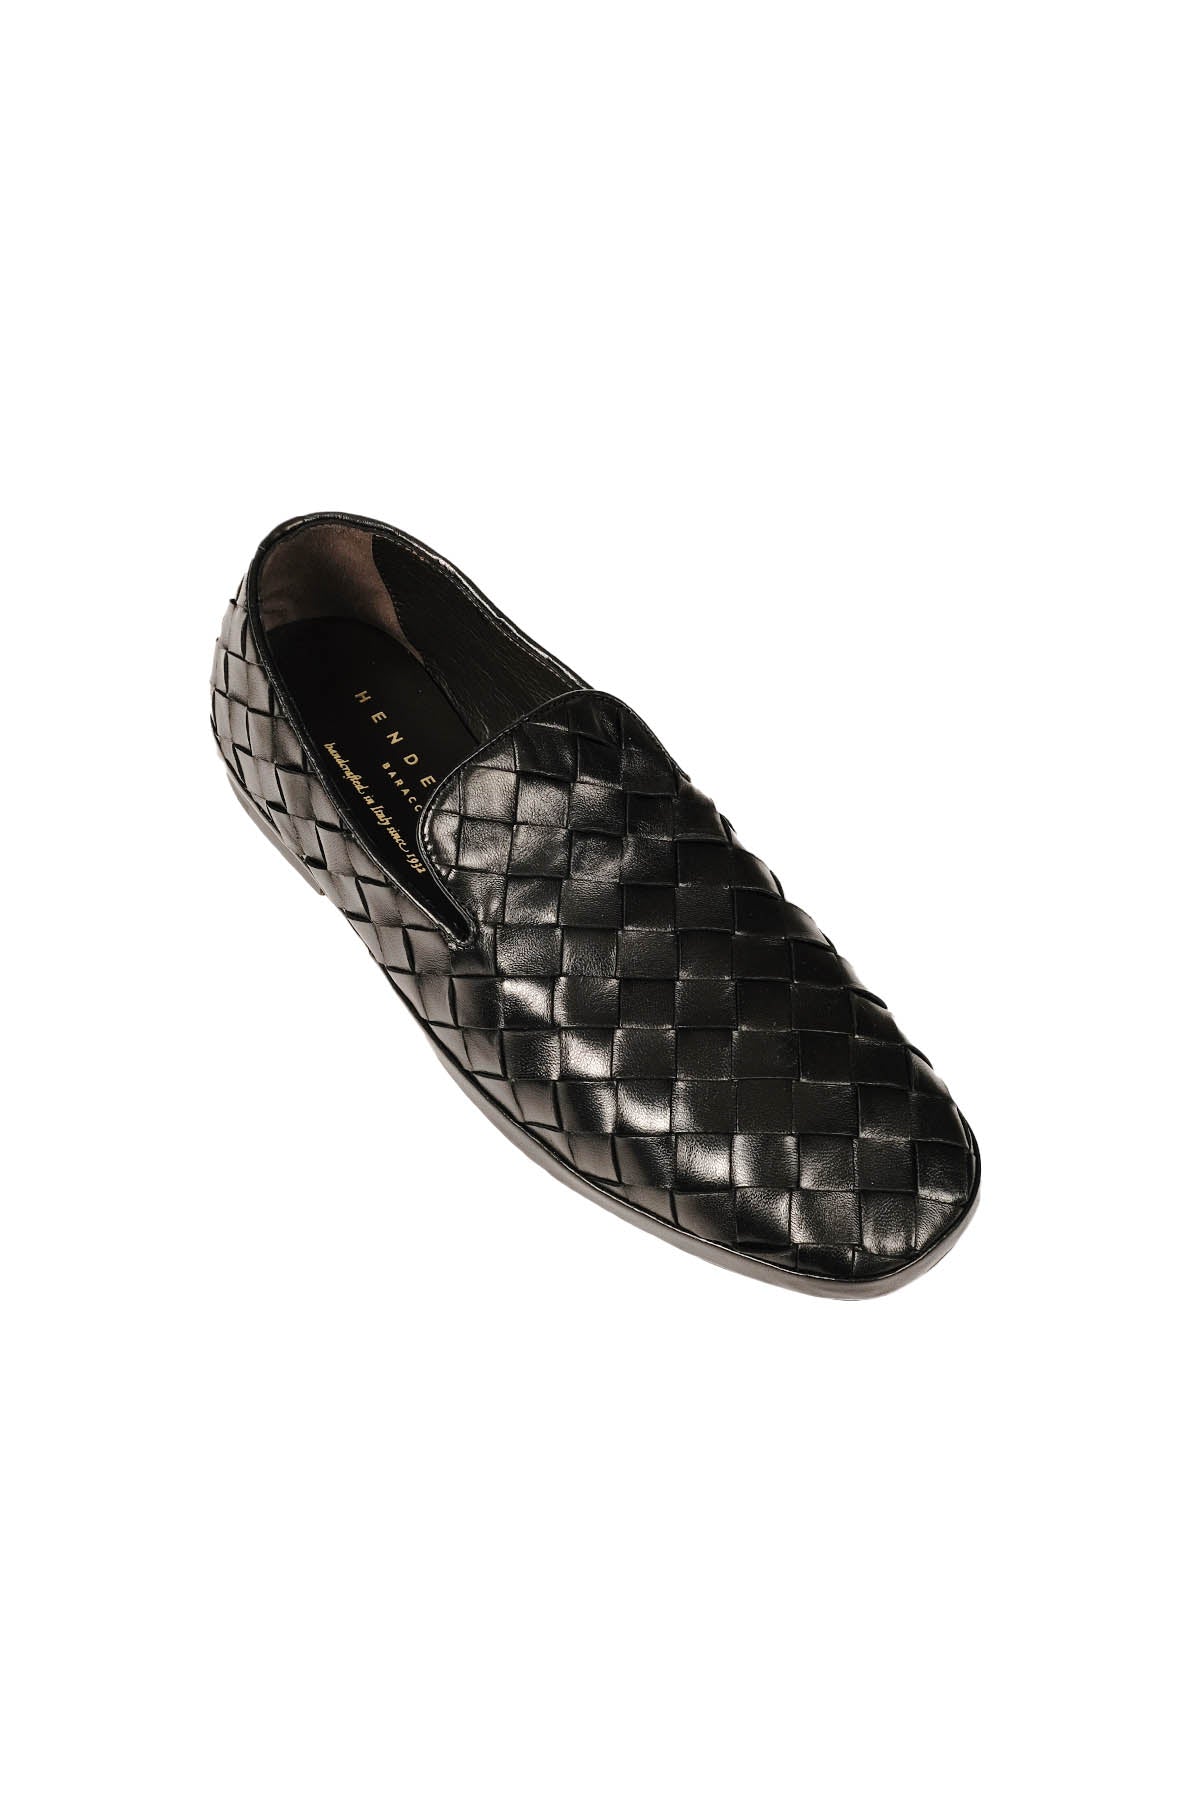 Henderson Gunea Örgü Deri Loafer Ayakkabı-Libas Trendy Fashion Store